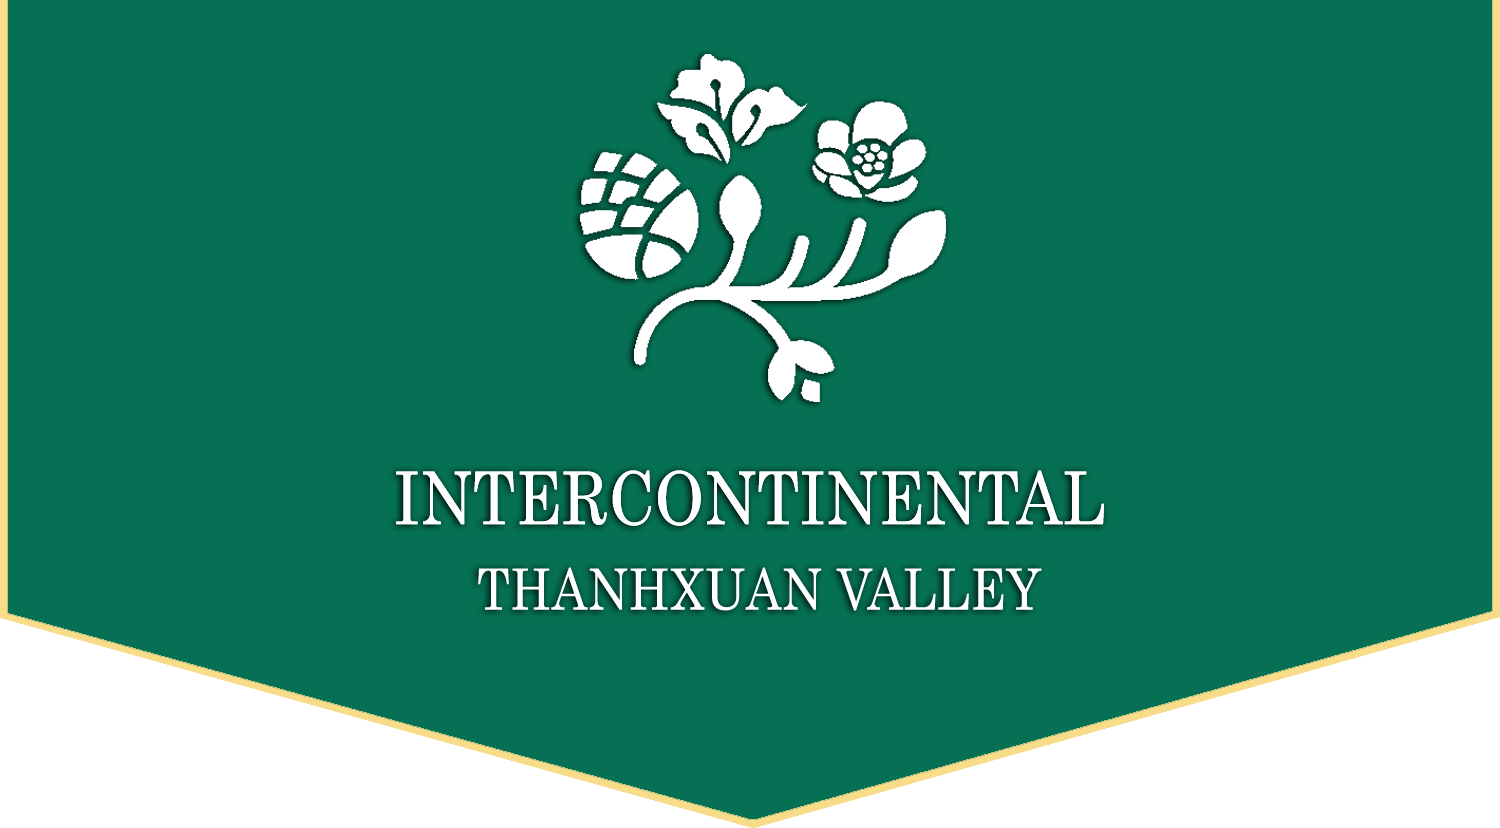 Intercontinental Thanh Xuân Valley